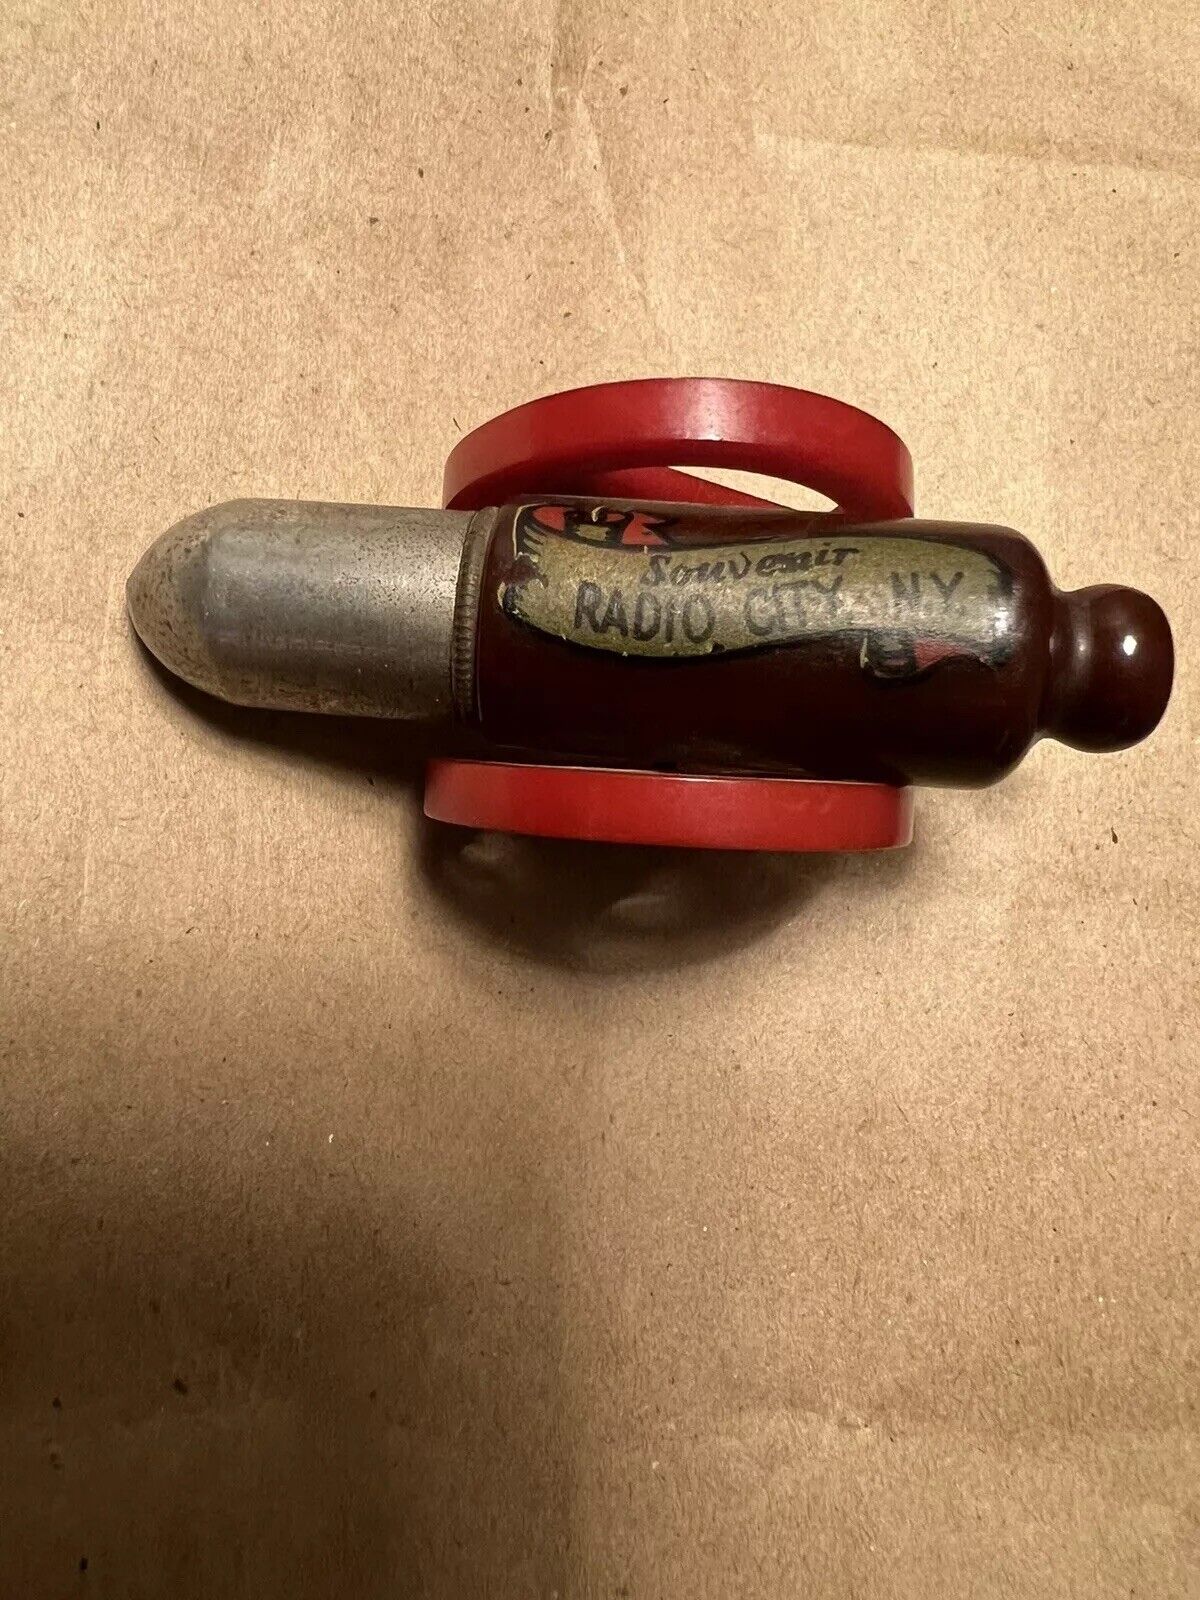 Bakelite Rare Lighter Cannon Souvenir Radio City New York